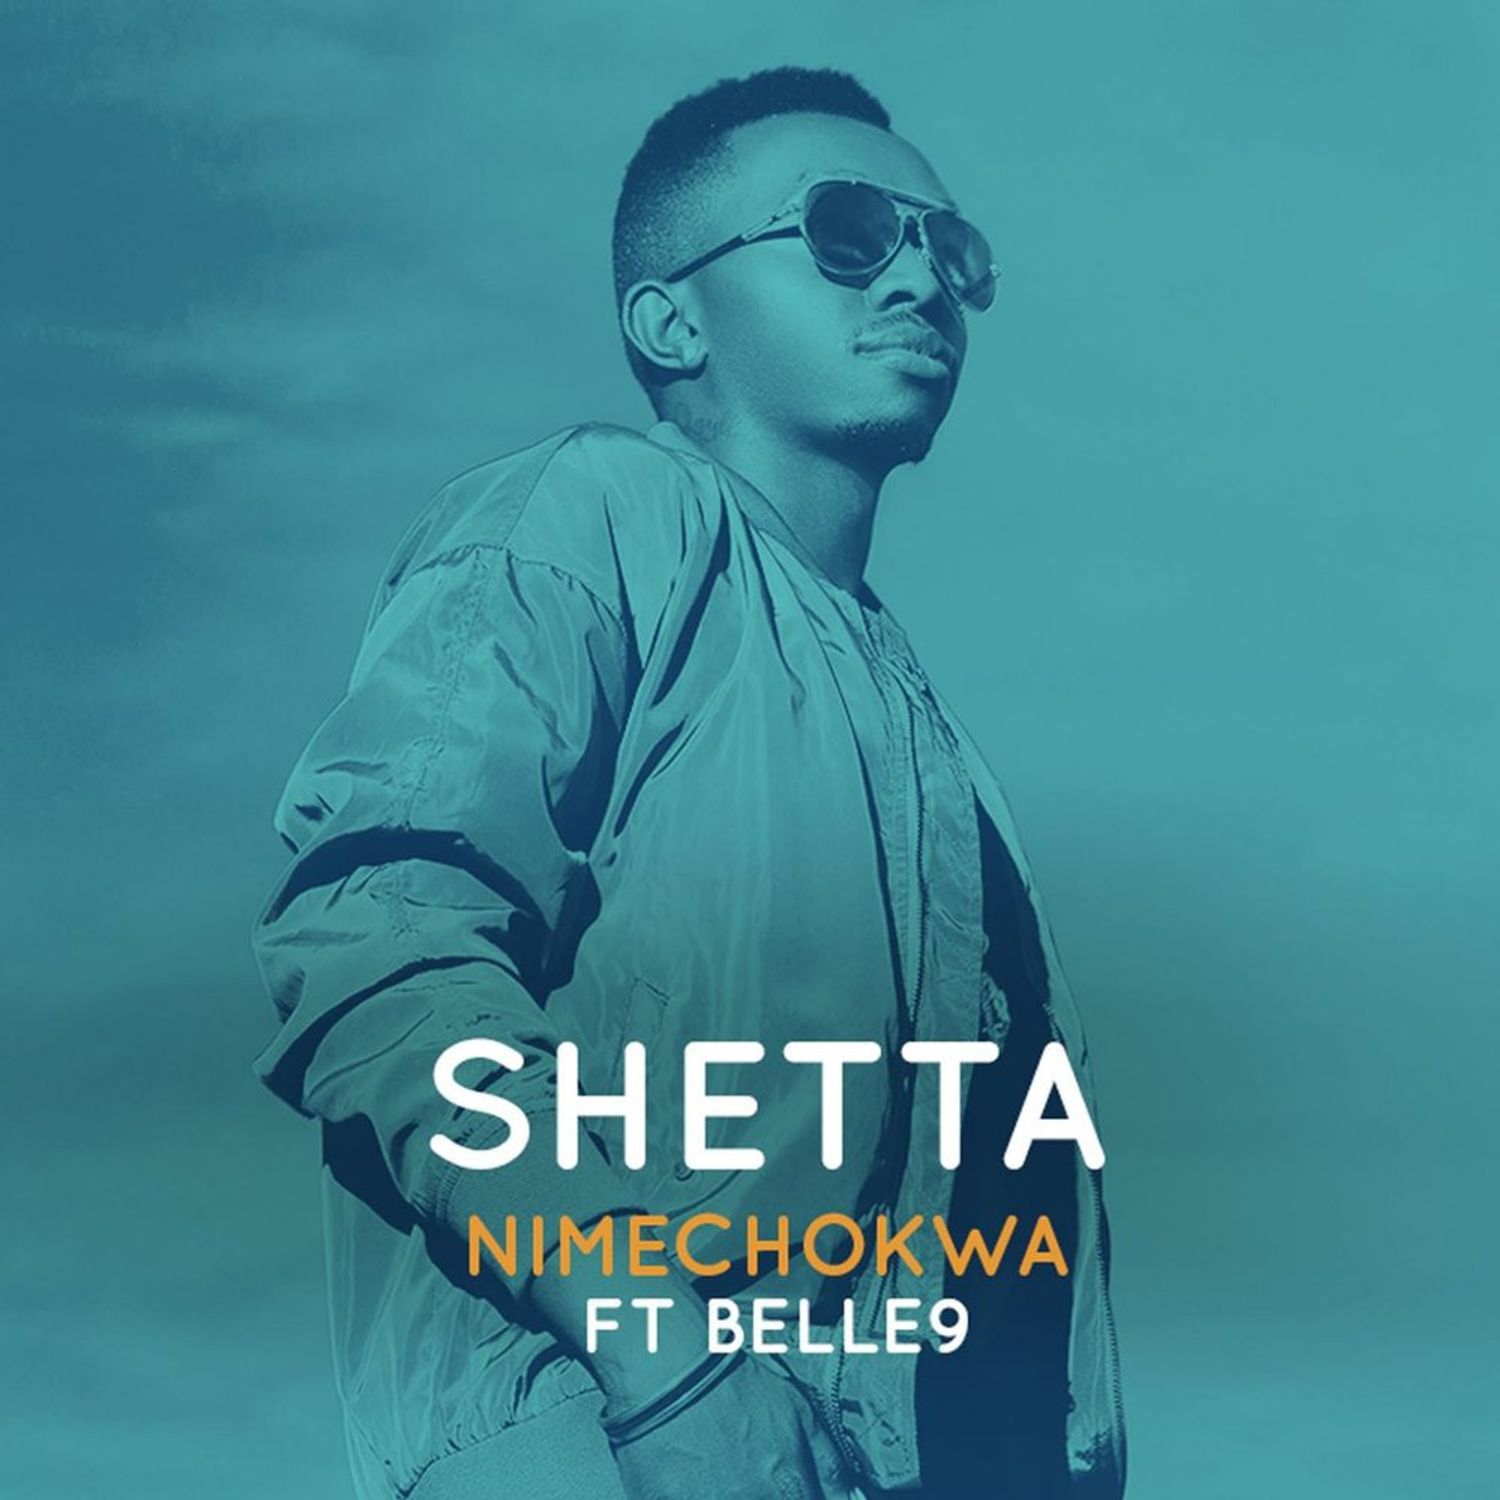 shetta ft belle 9 nimechokwa